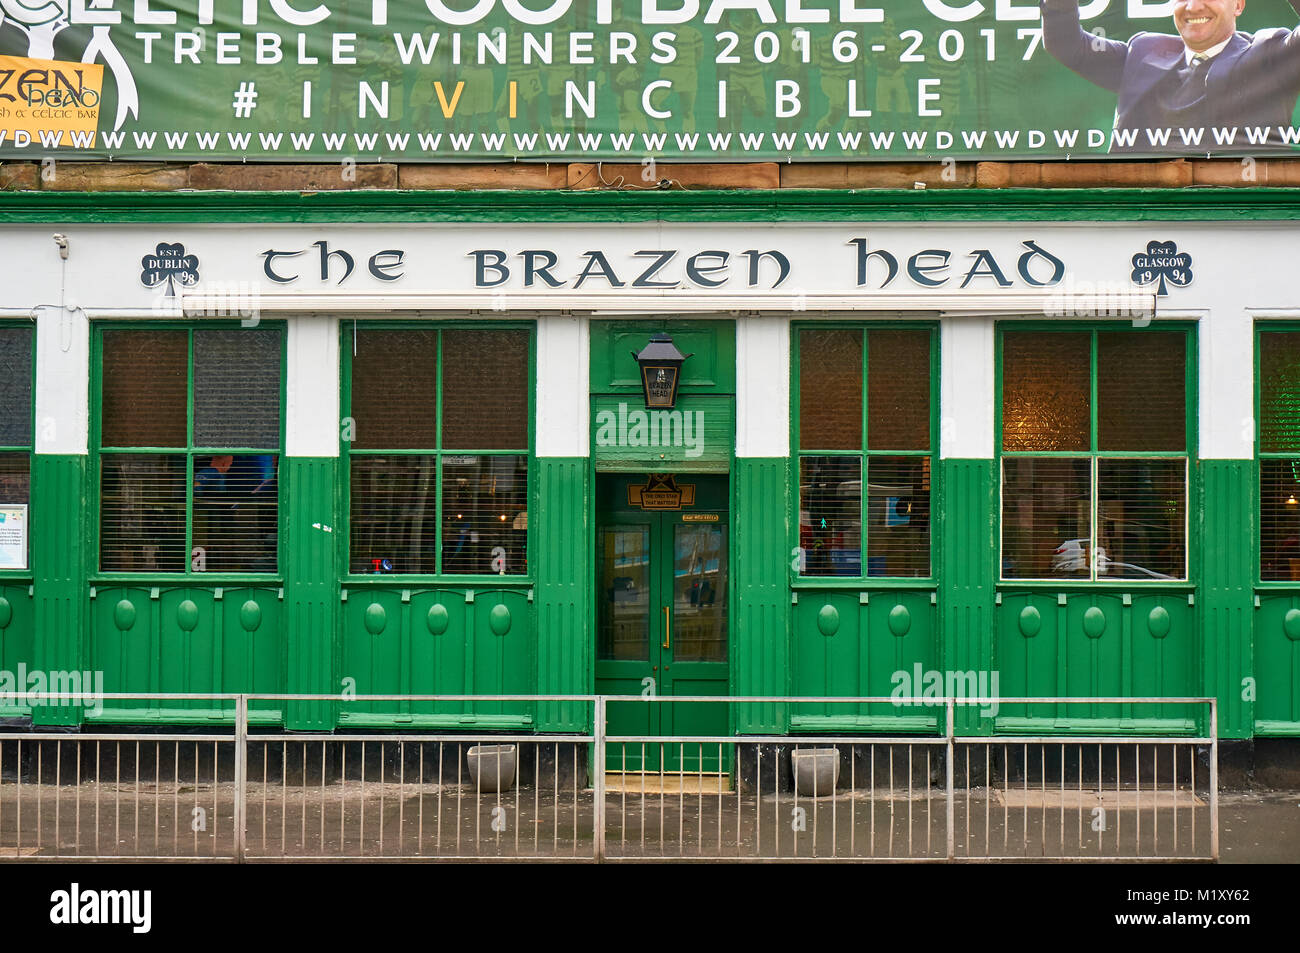 The Brazen Head - a pub supporting Celtic football club in Glasgow. Stock Photo